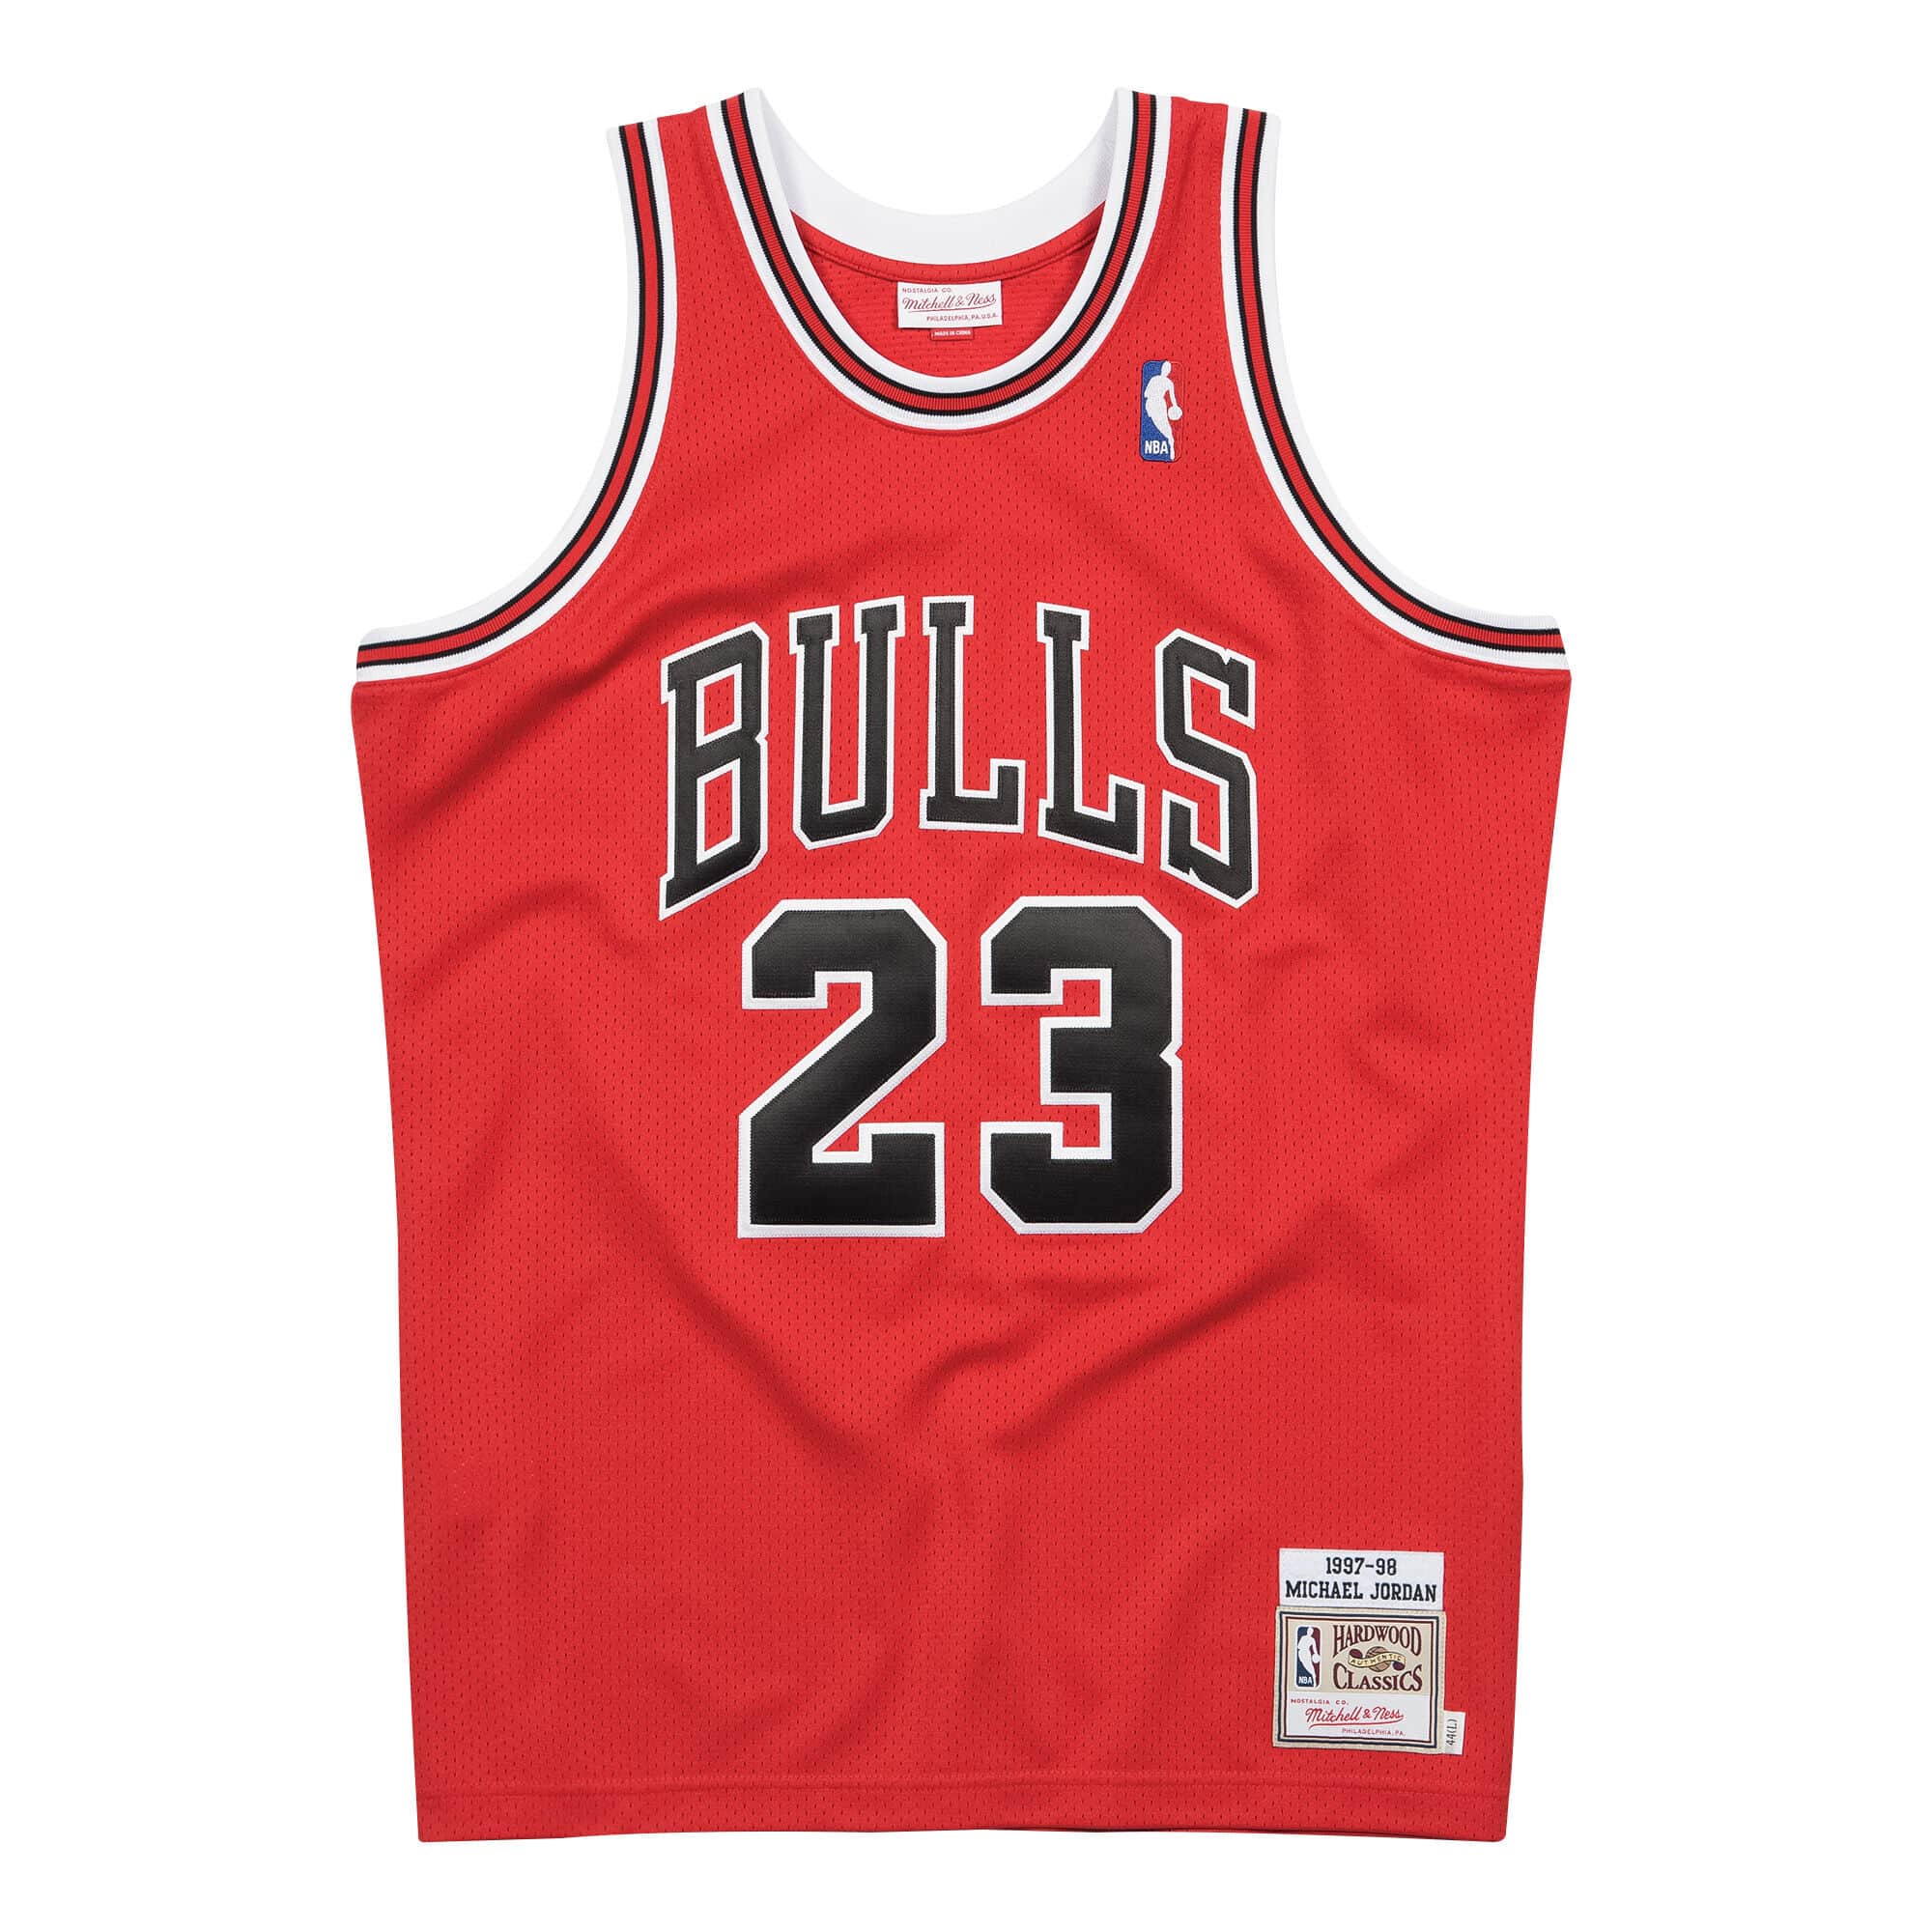 Michael Jordan Chicago Bulls 1997-98 Jersey